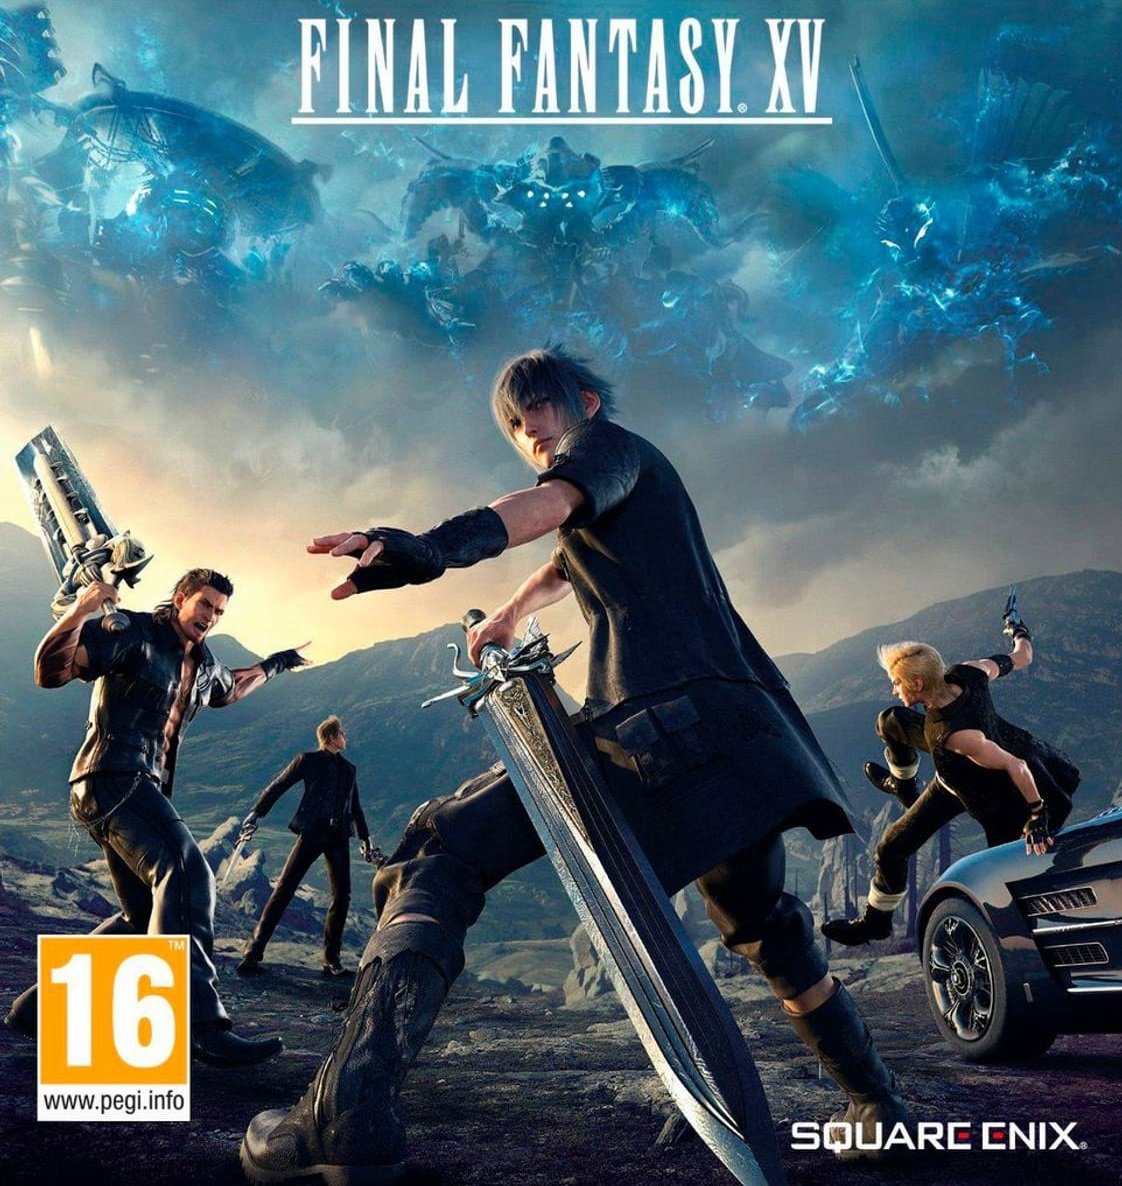 jaquette du jeu vidéo Final Fantasy XV